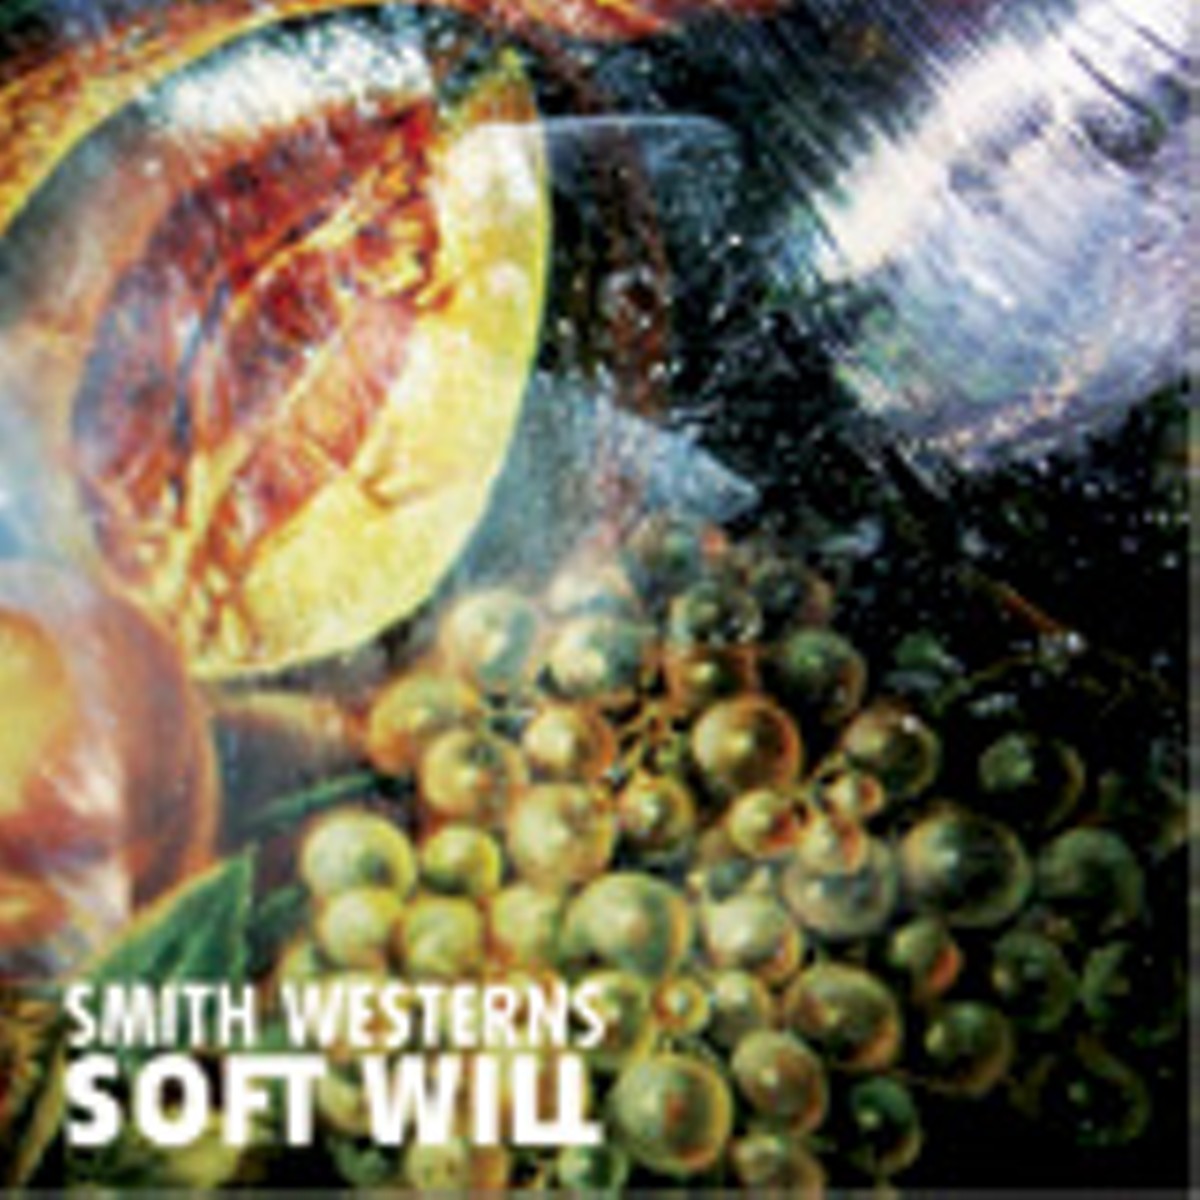 Soft Will